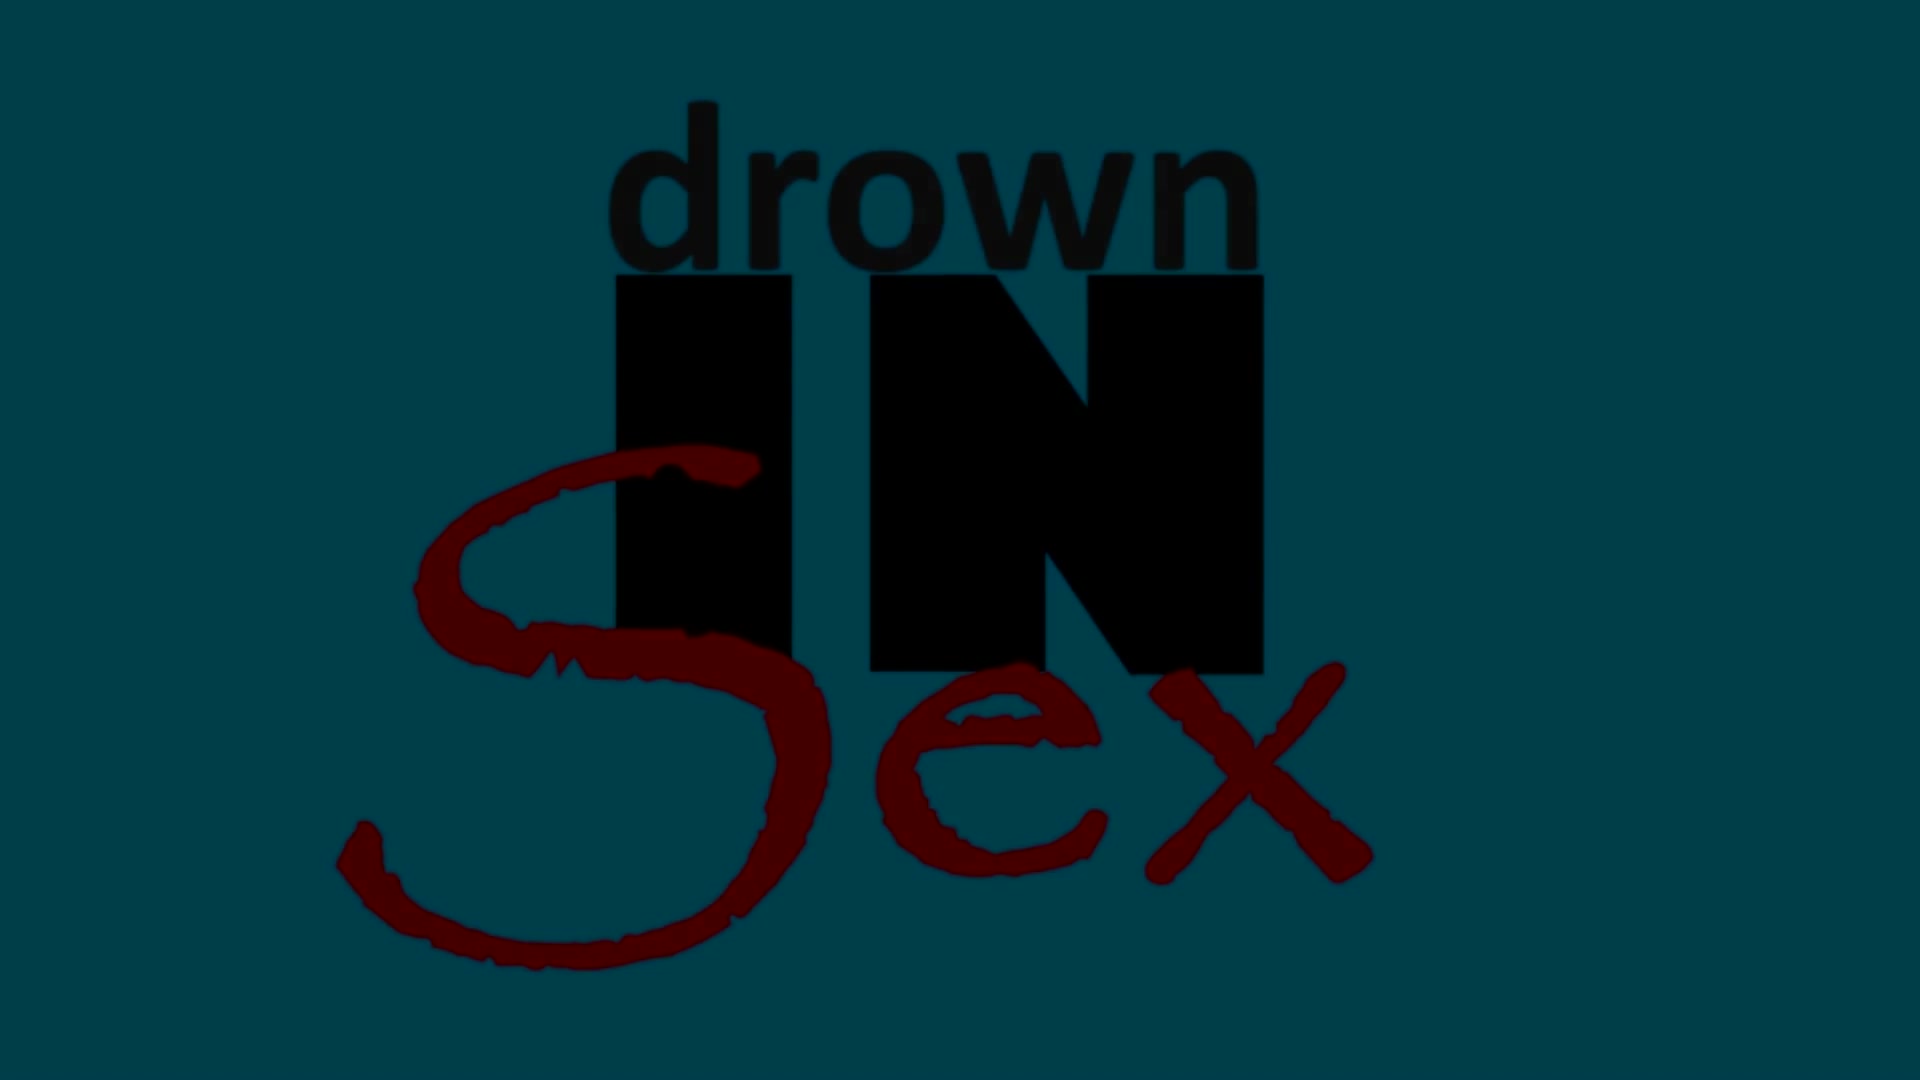 Drowninsex anal creampie marathon he cums my ass four times verified amateurs free porn videos